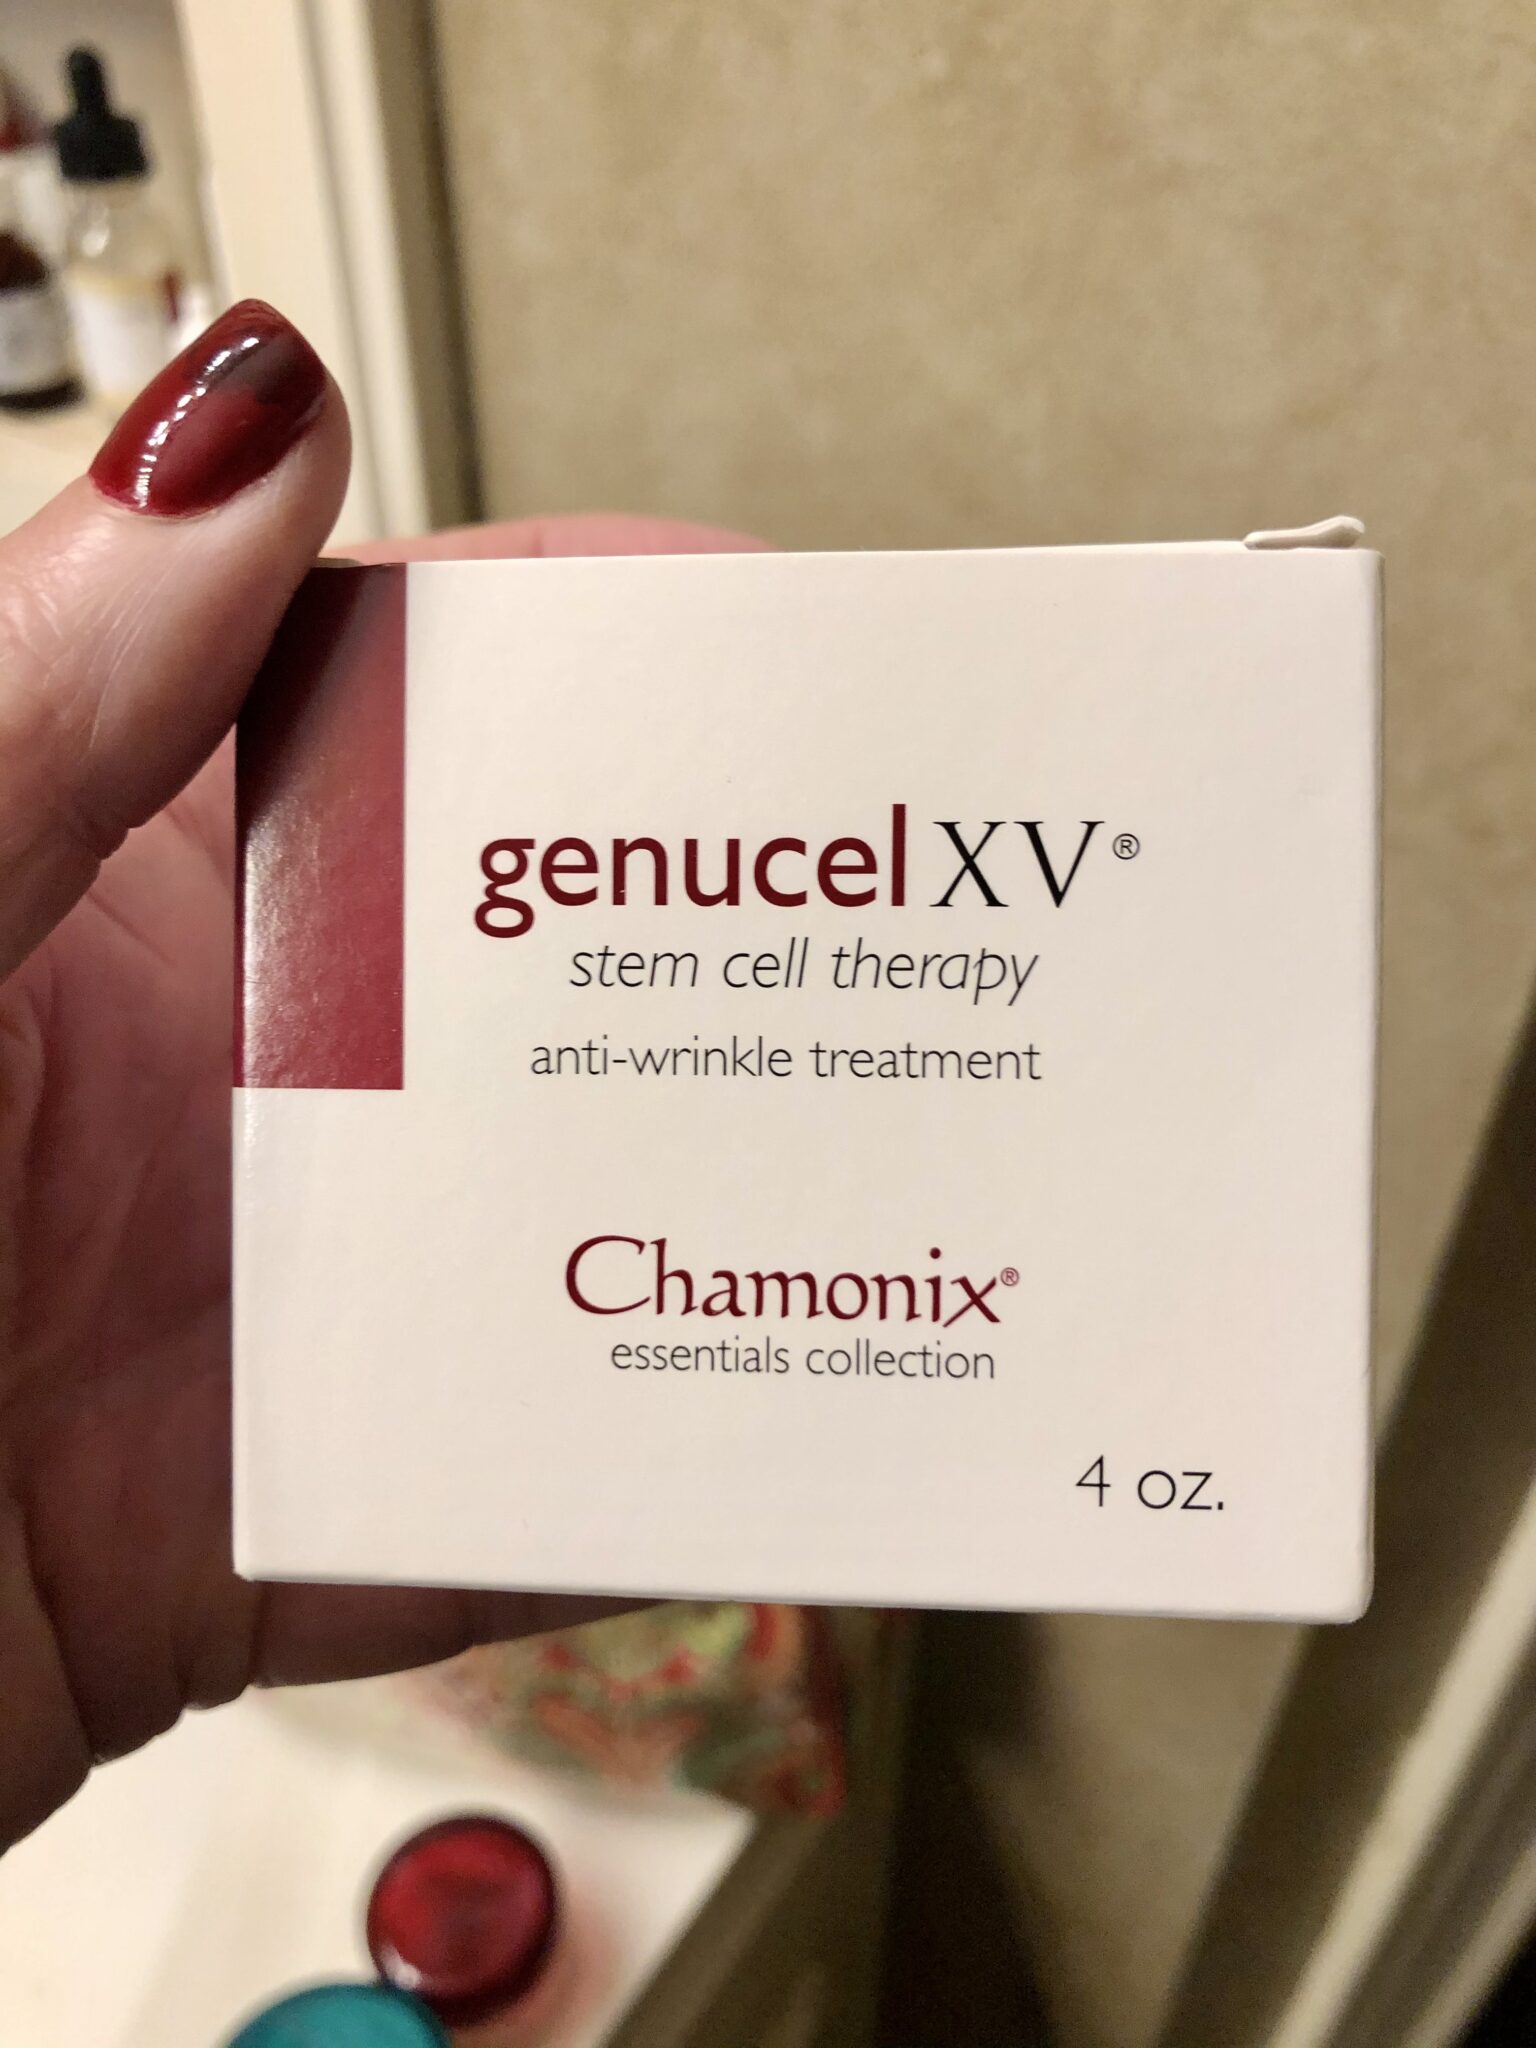 Pamela Lutrell uses Genucel XV twice a day